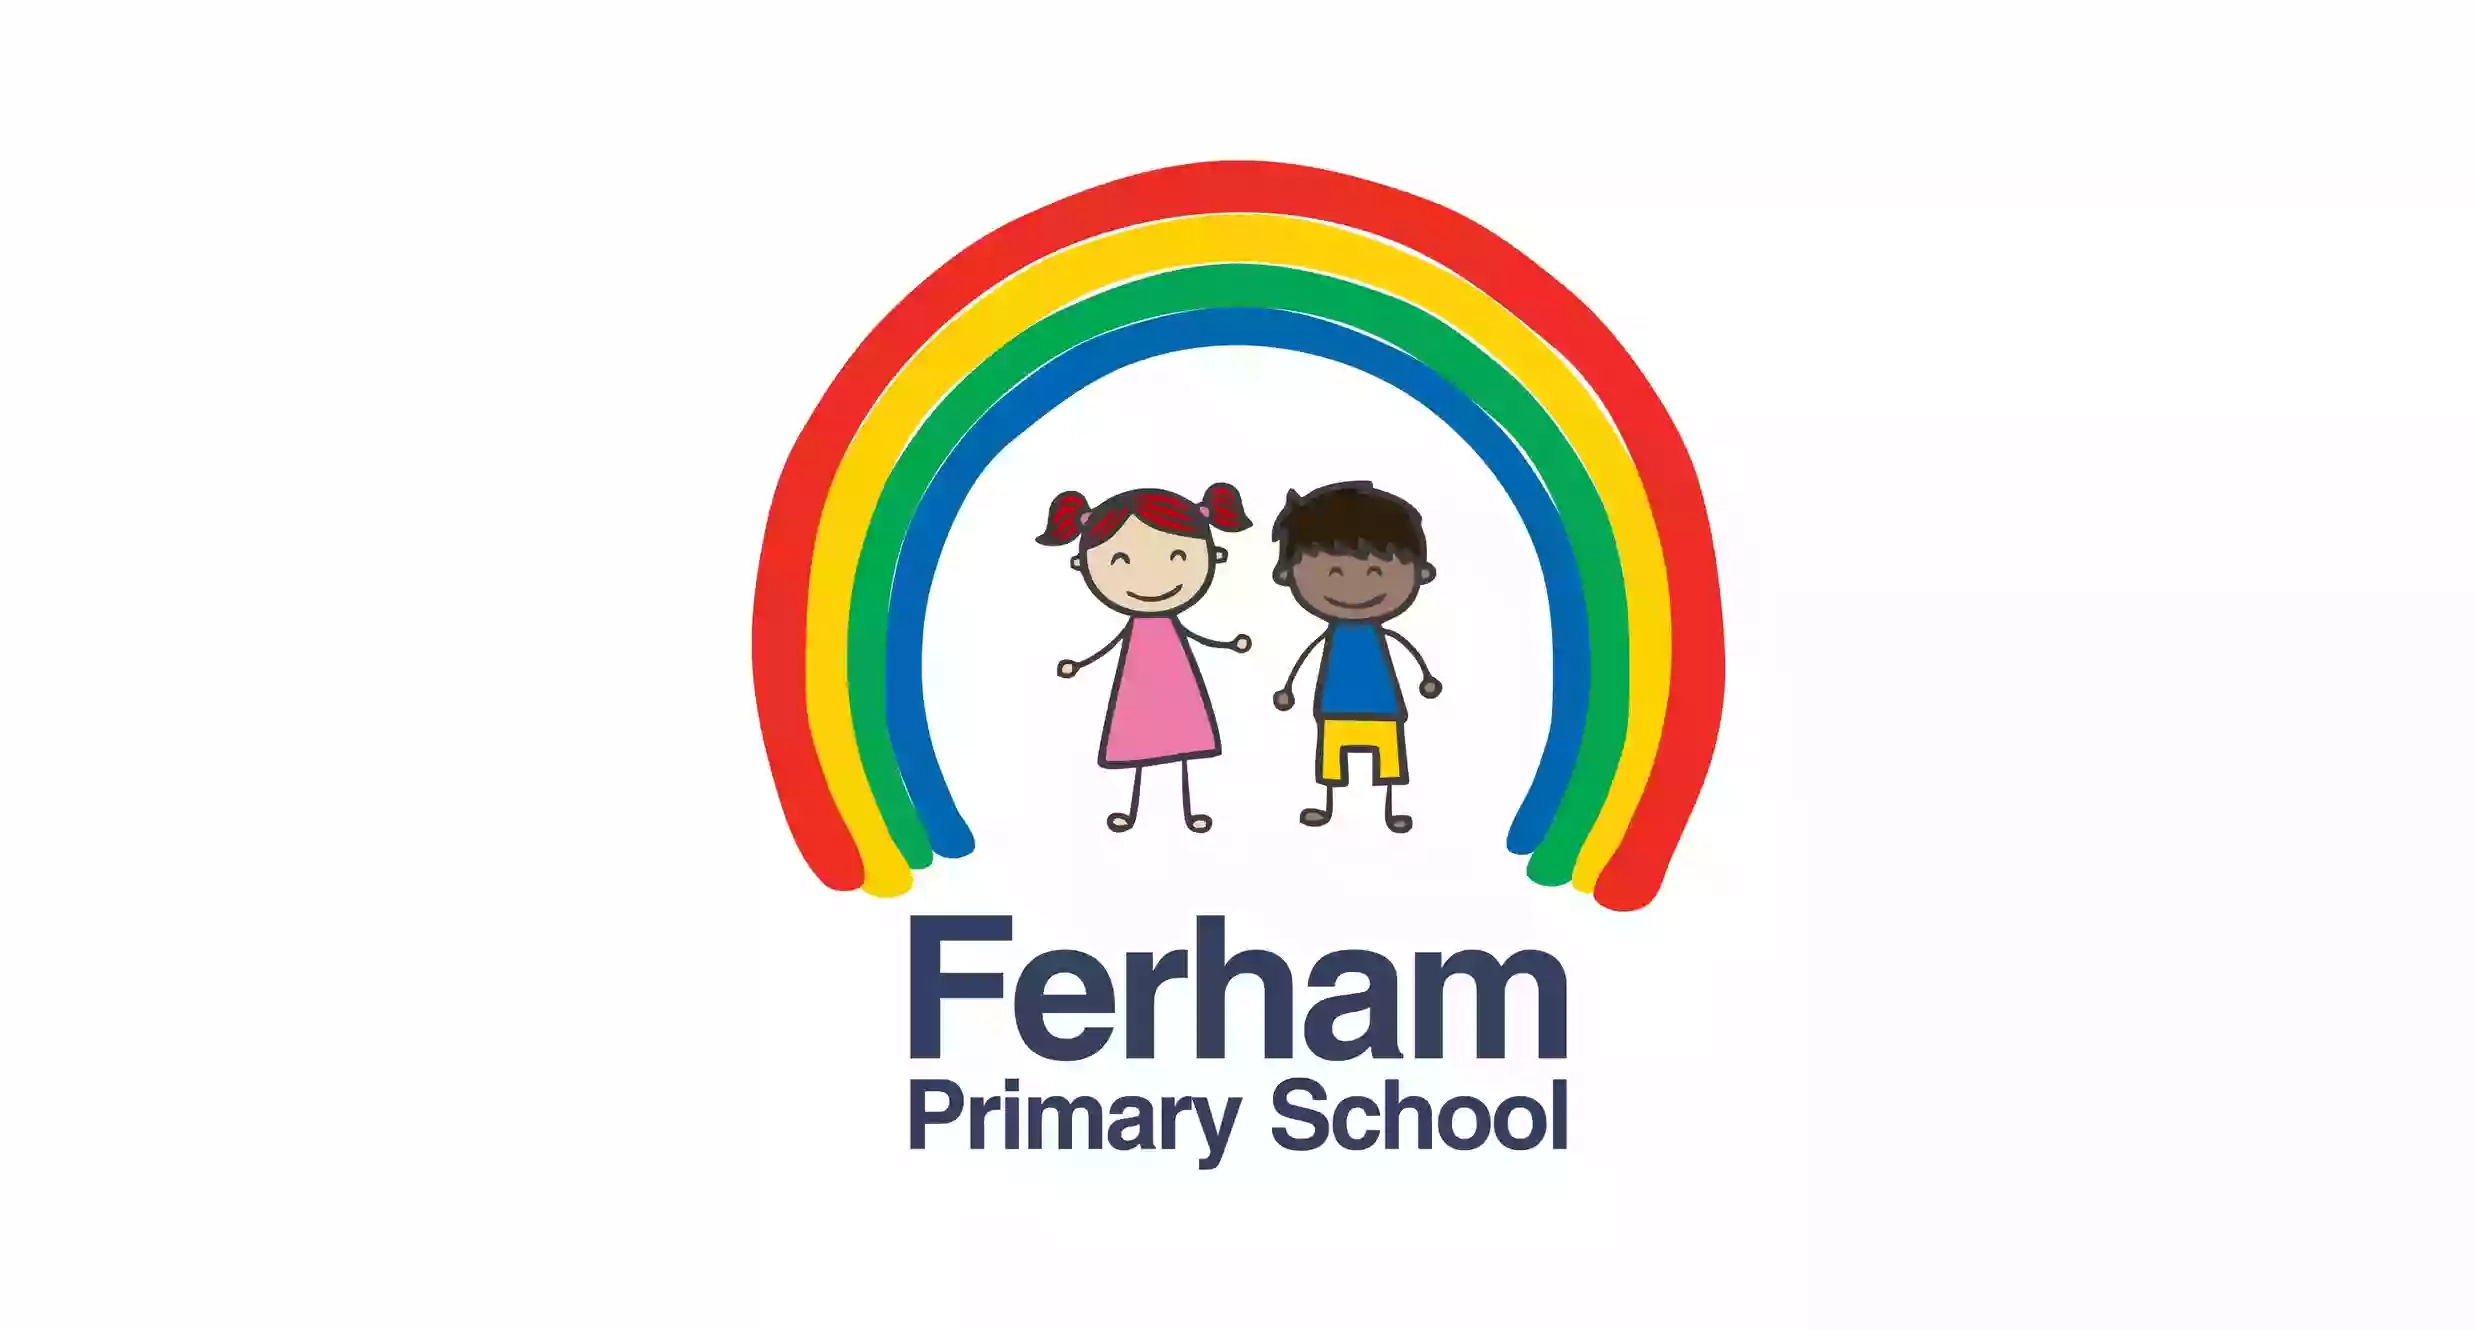 Ferham Primary School